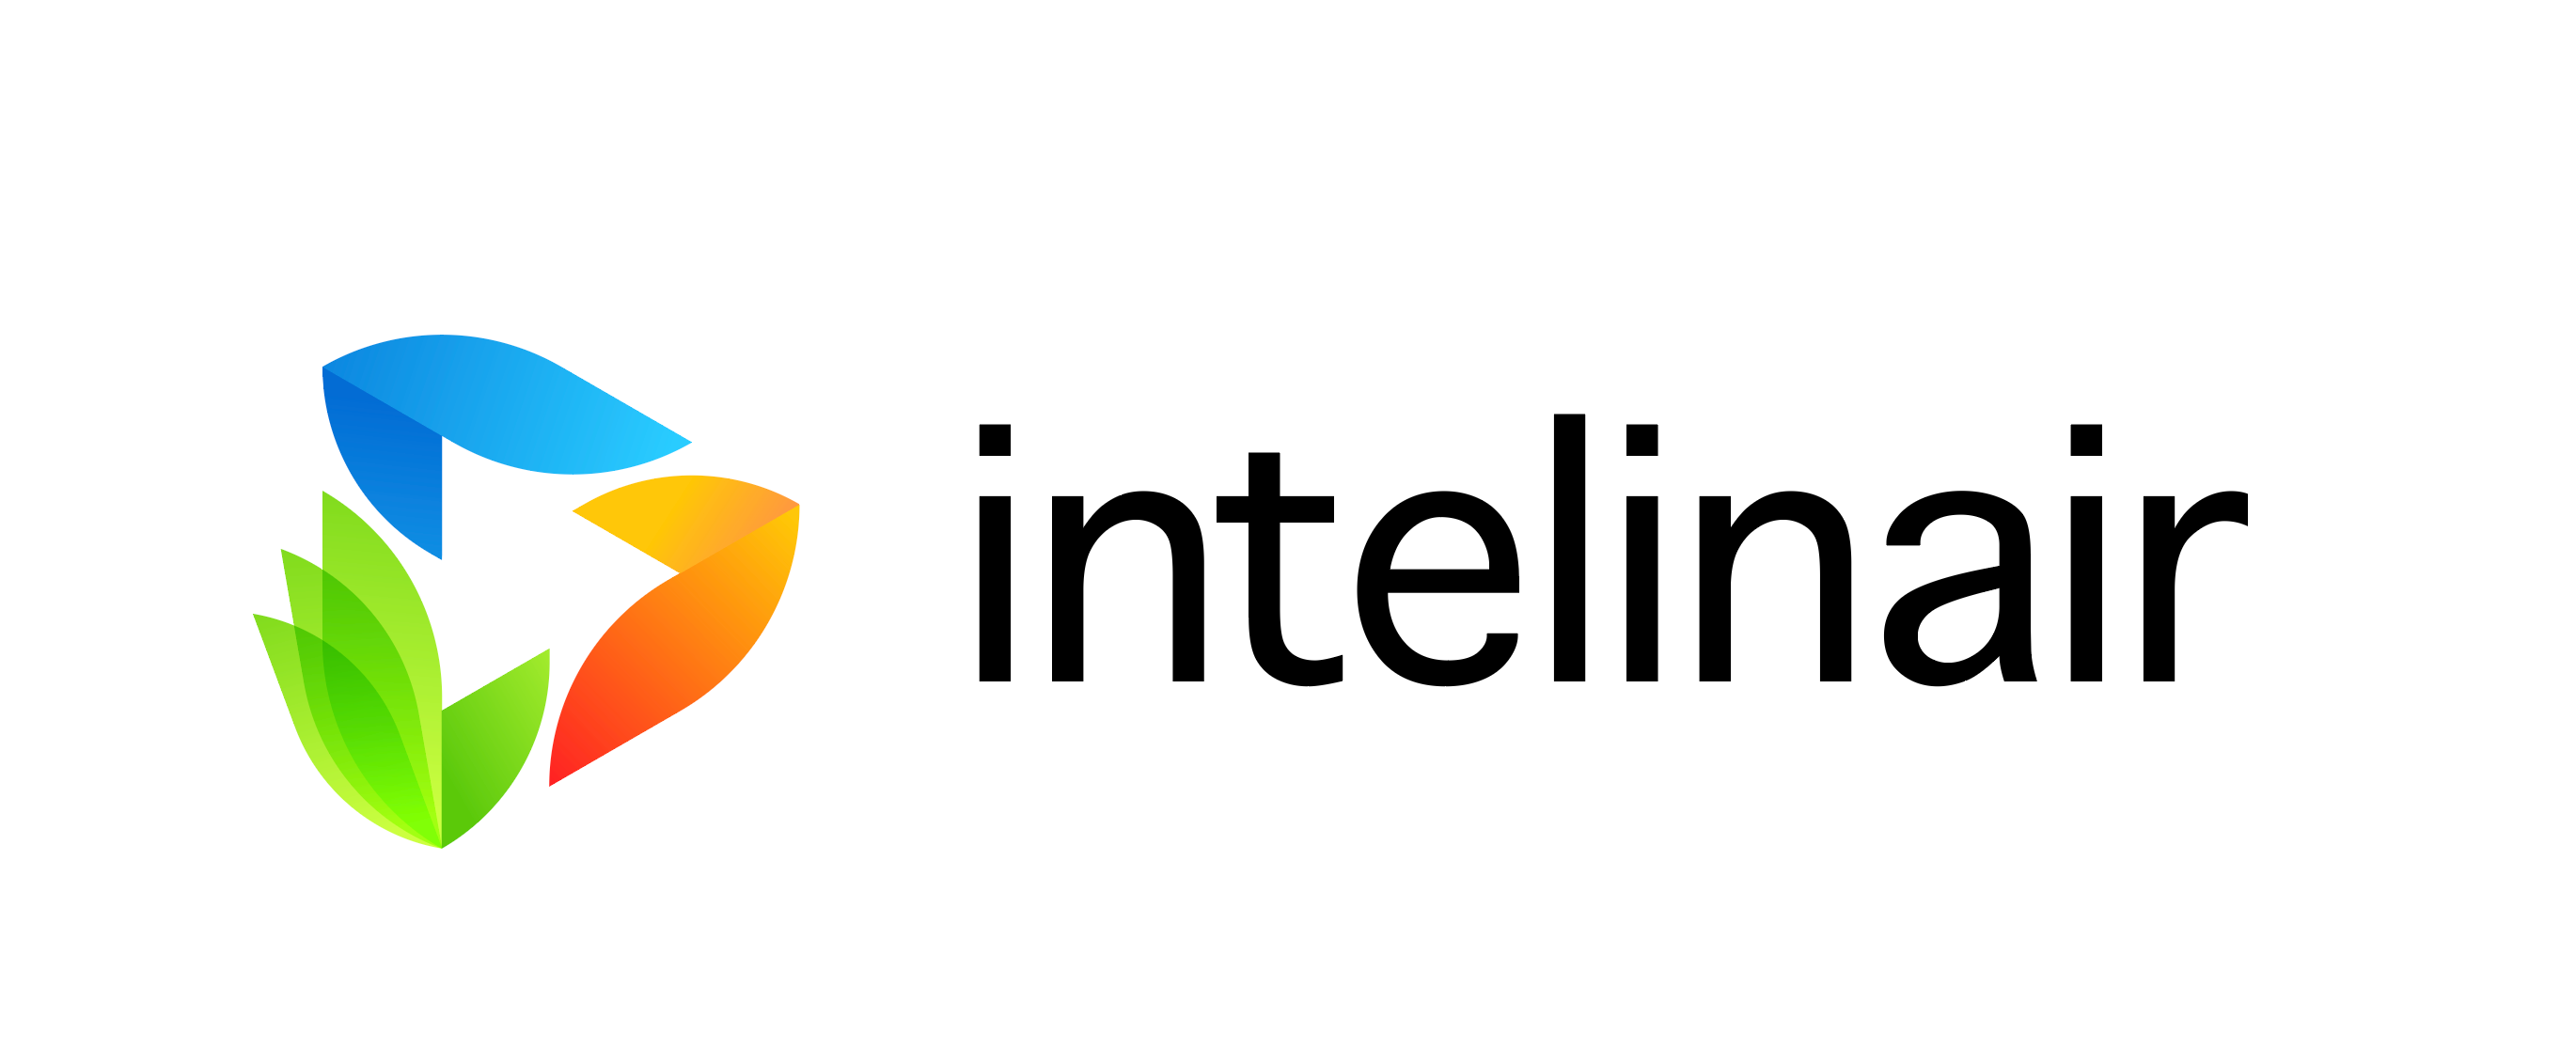 Intelinair Logo